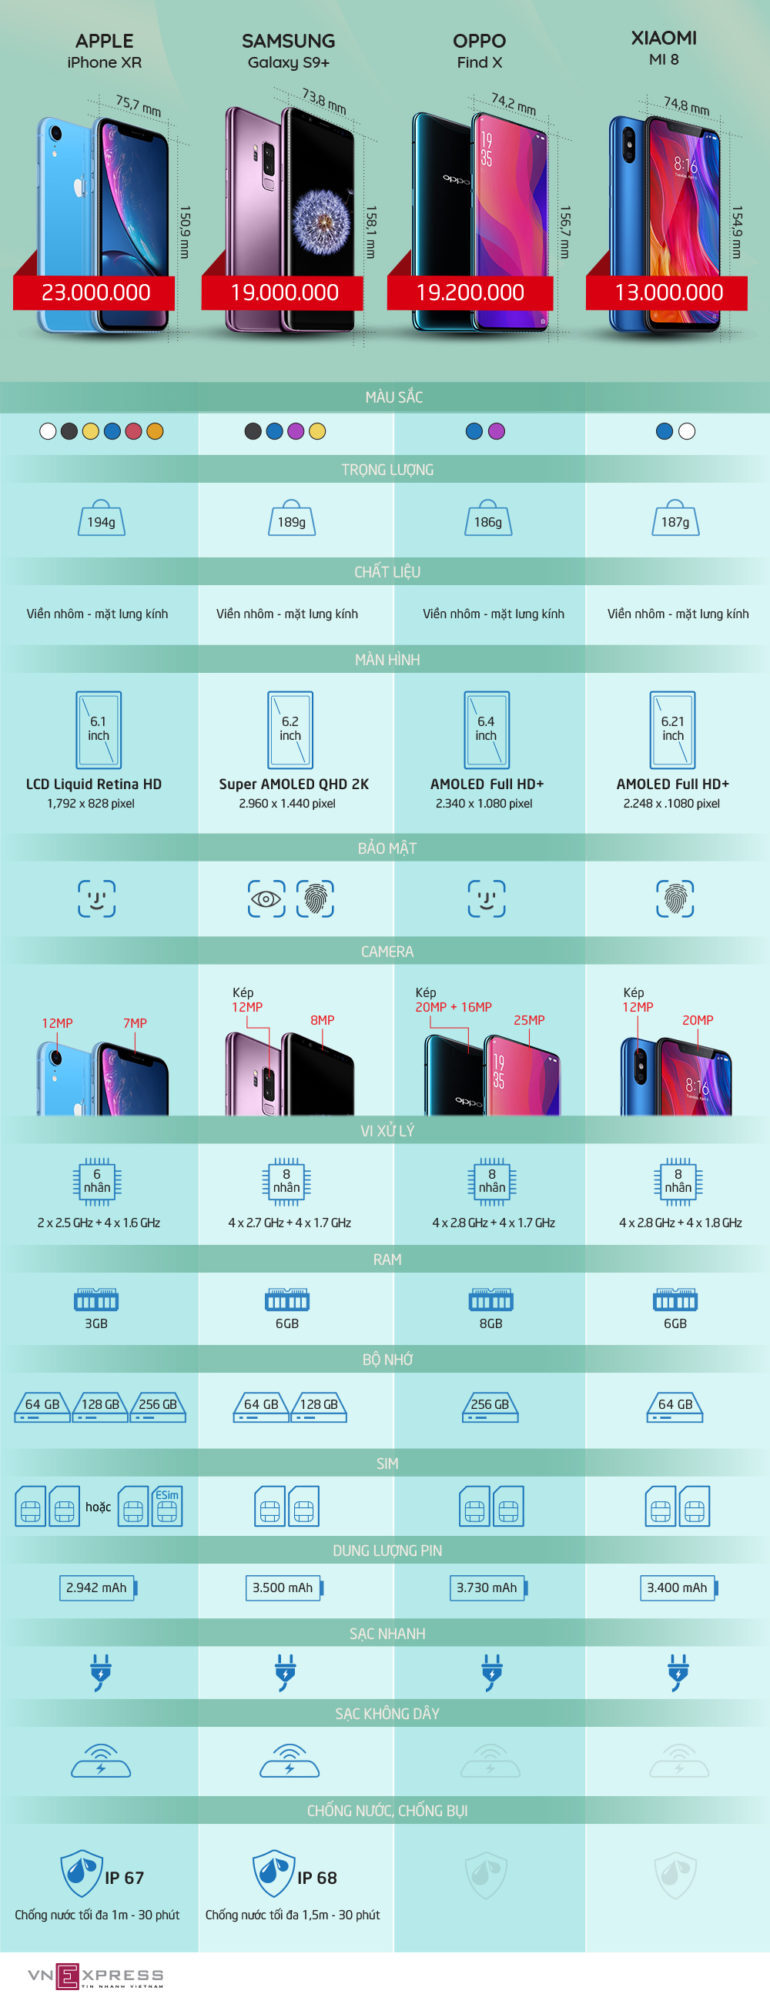 So sánh điện thoại Apple iPhone XR - Samsung Galaxy S9 plus - Oppo Find X - Xiaomi Mi 8